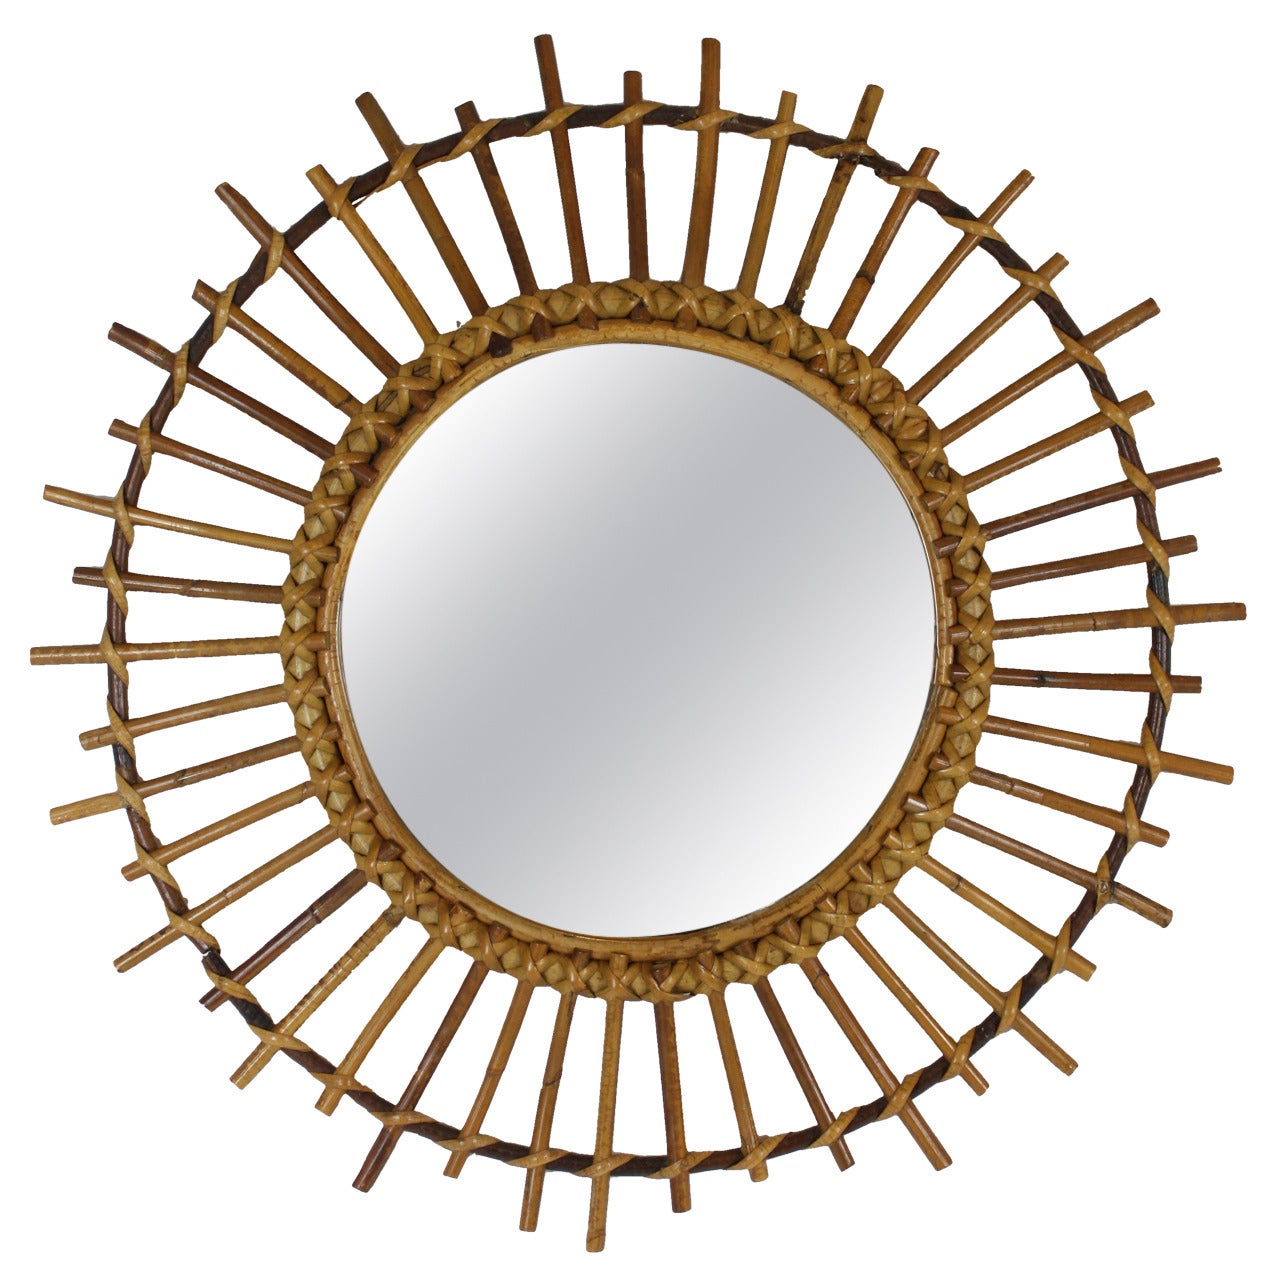 1960s Spanish Rattan Sunburst Mirror